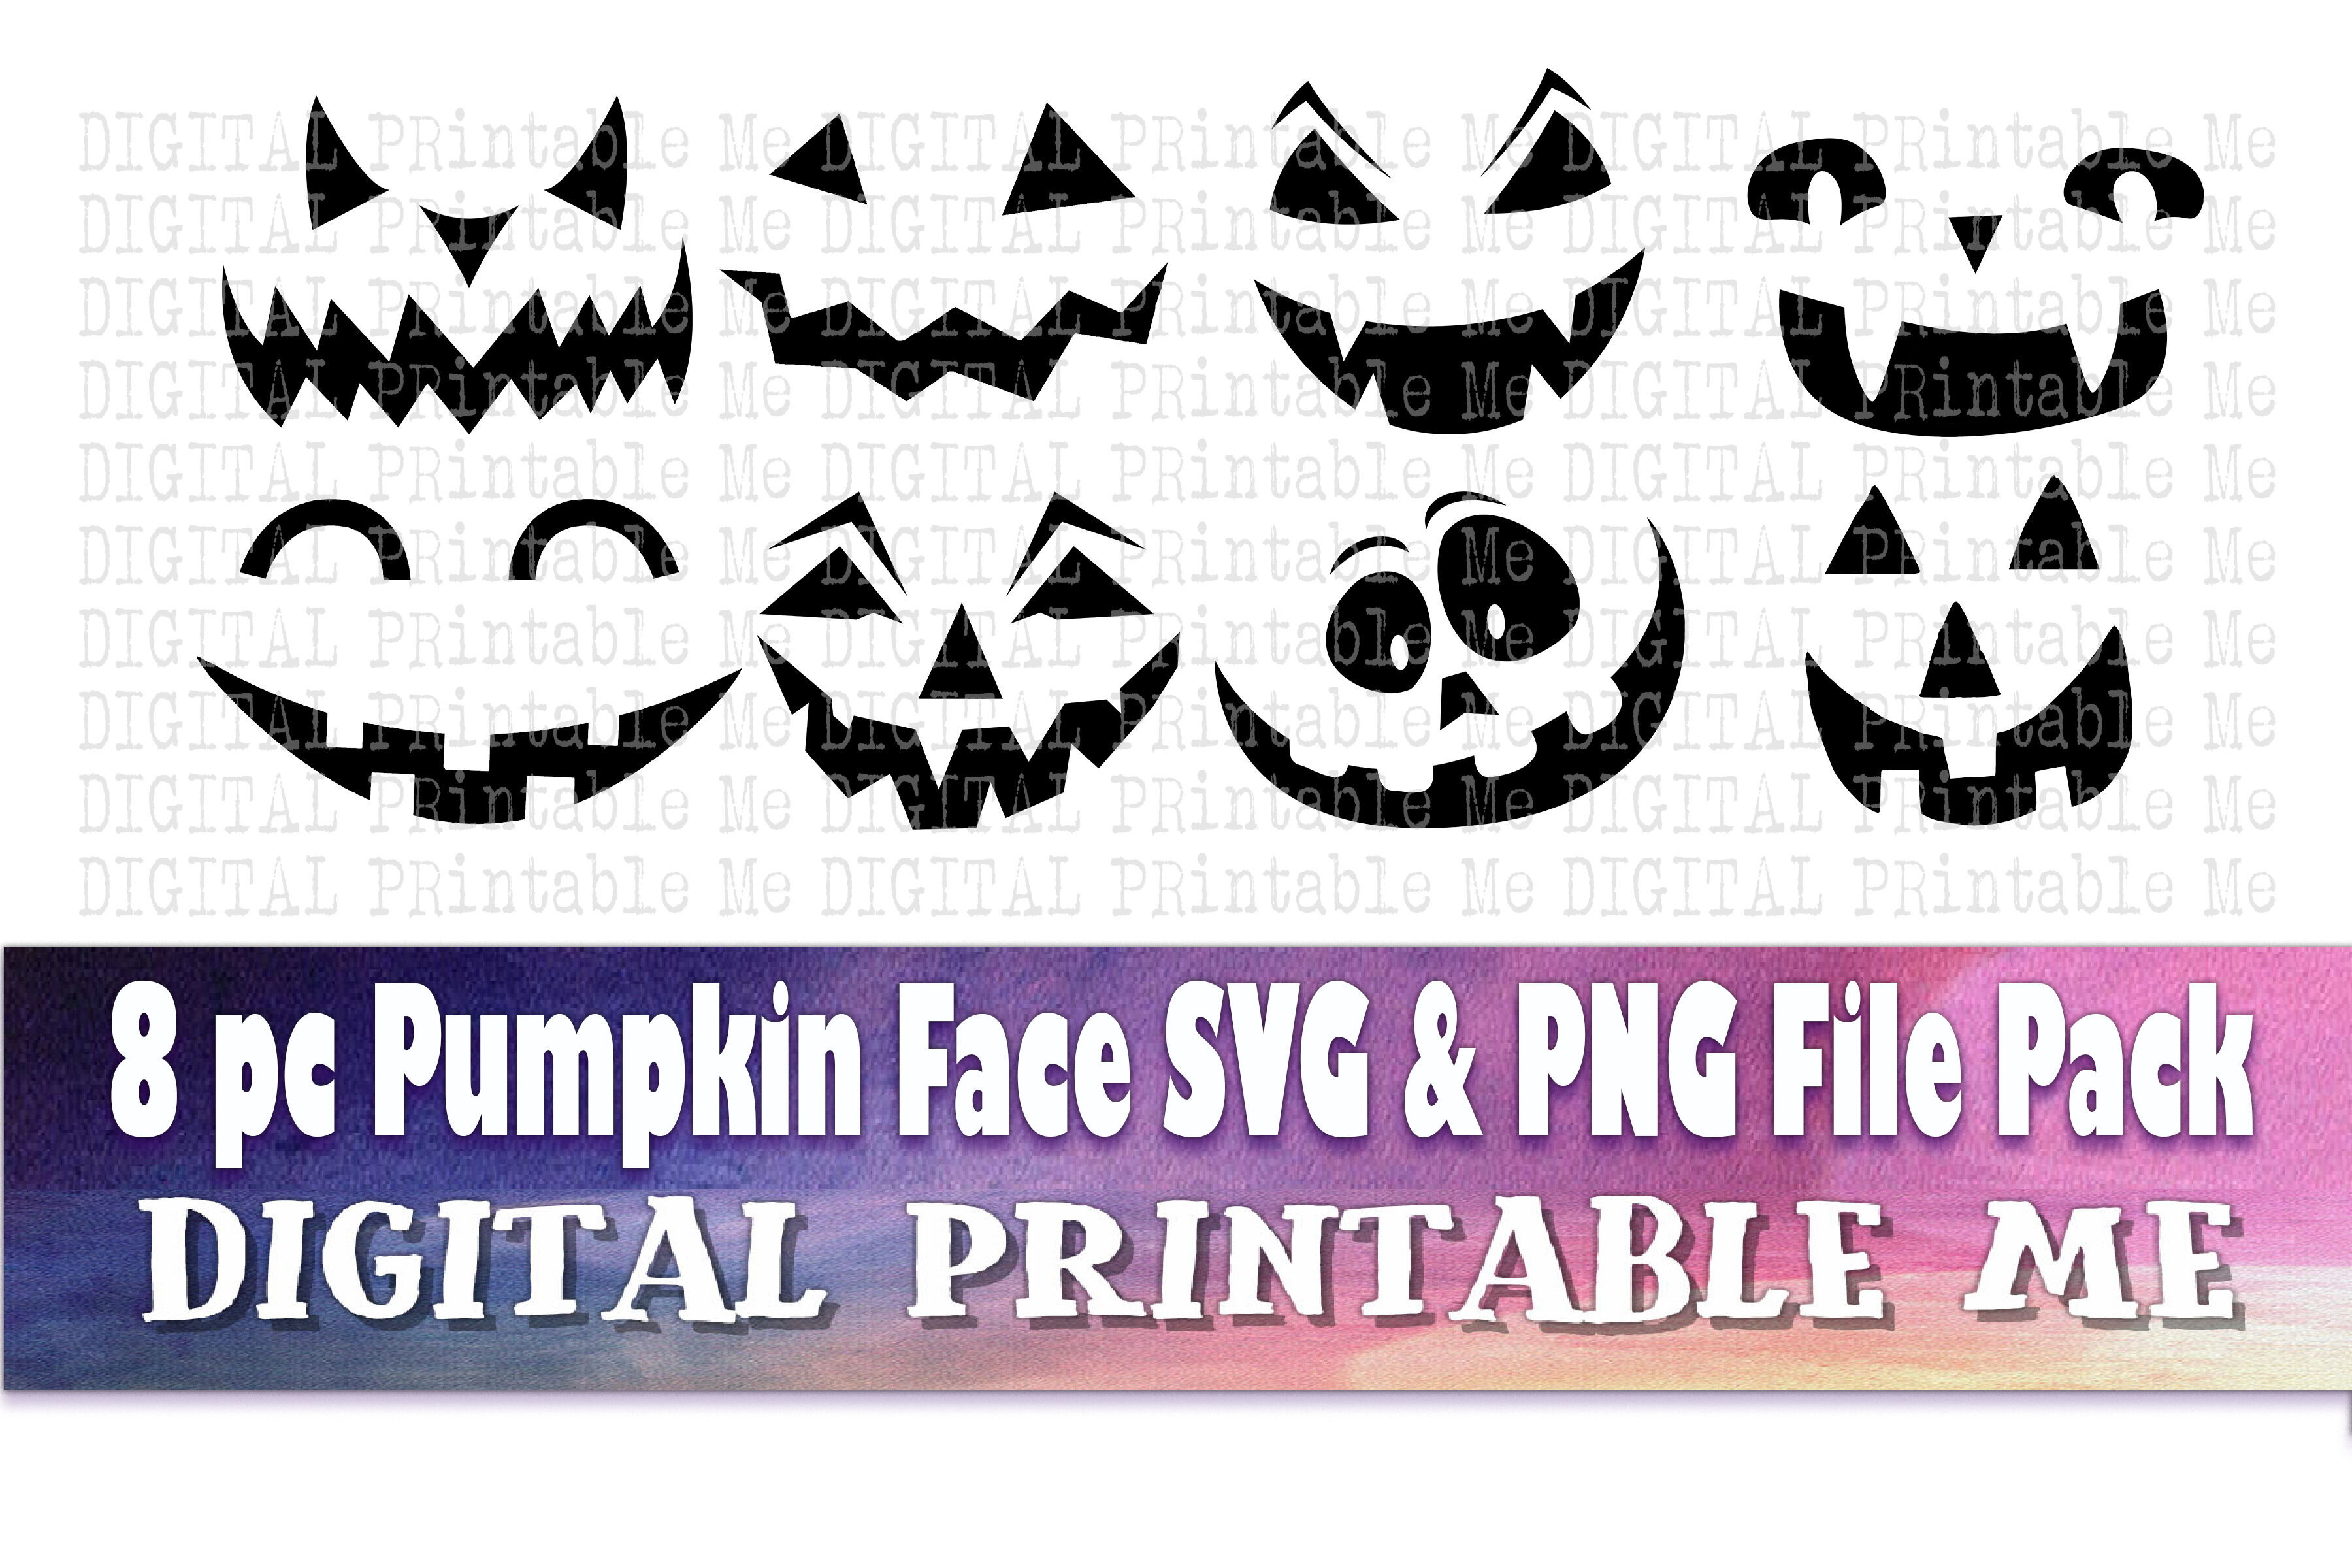 Pumpkin Face Silhouette Svg Png Clip Art Diy Images Pack Carvi By Digitalprintableme Thehungryjpeg Com